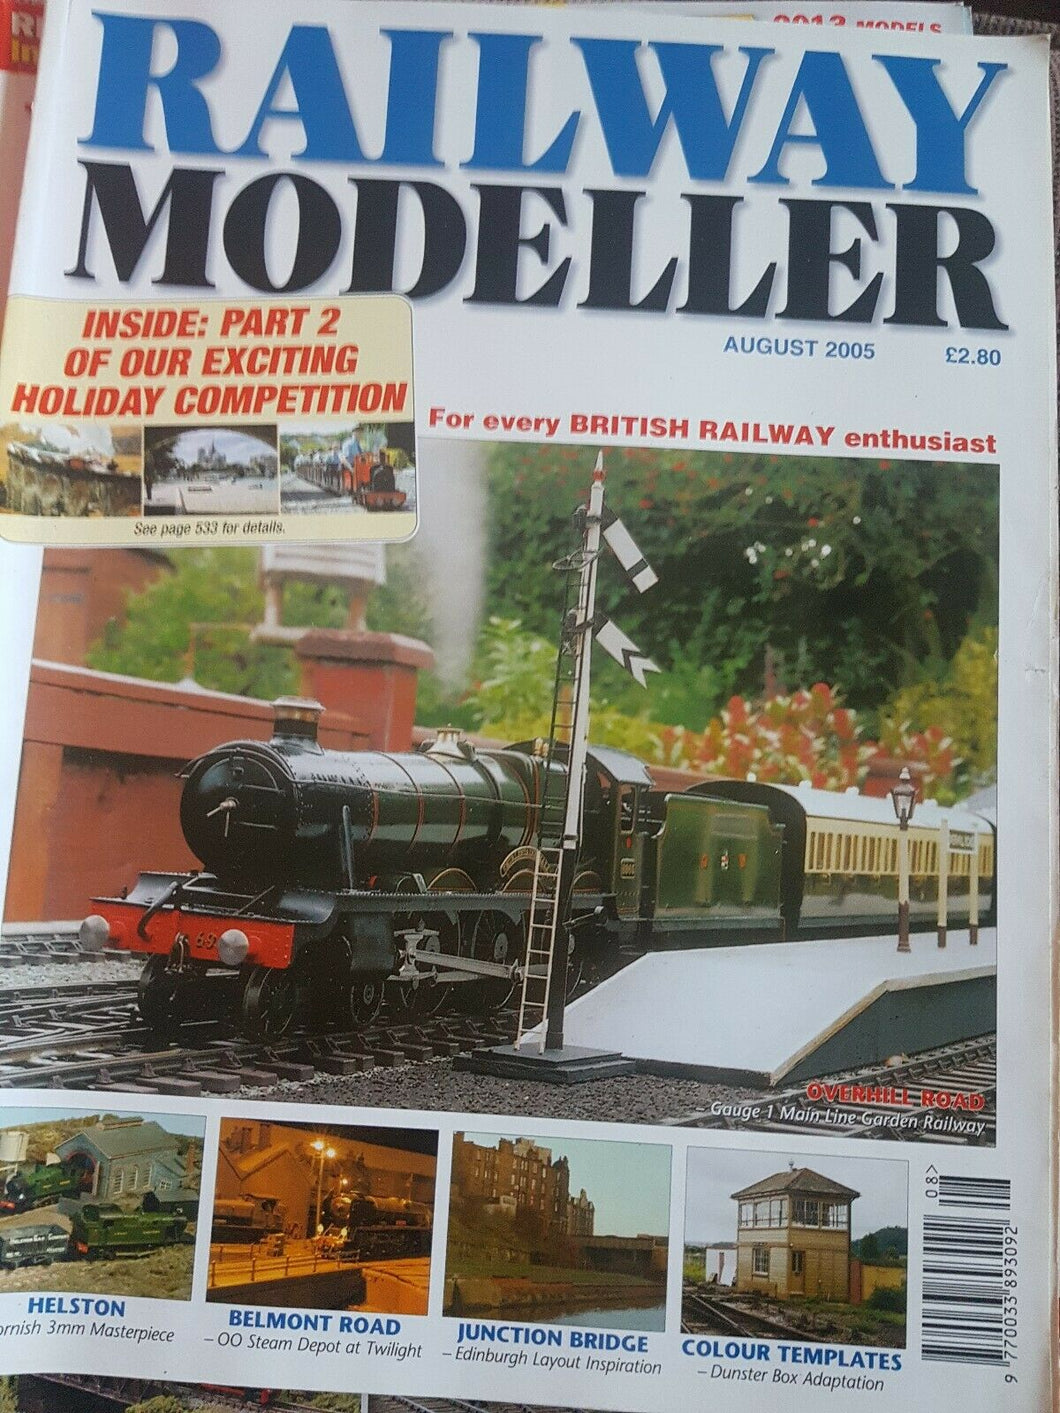 Railway modeller magazine August 2005